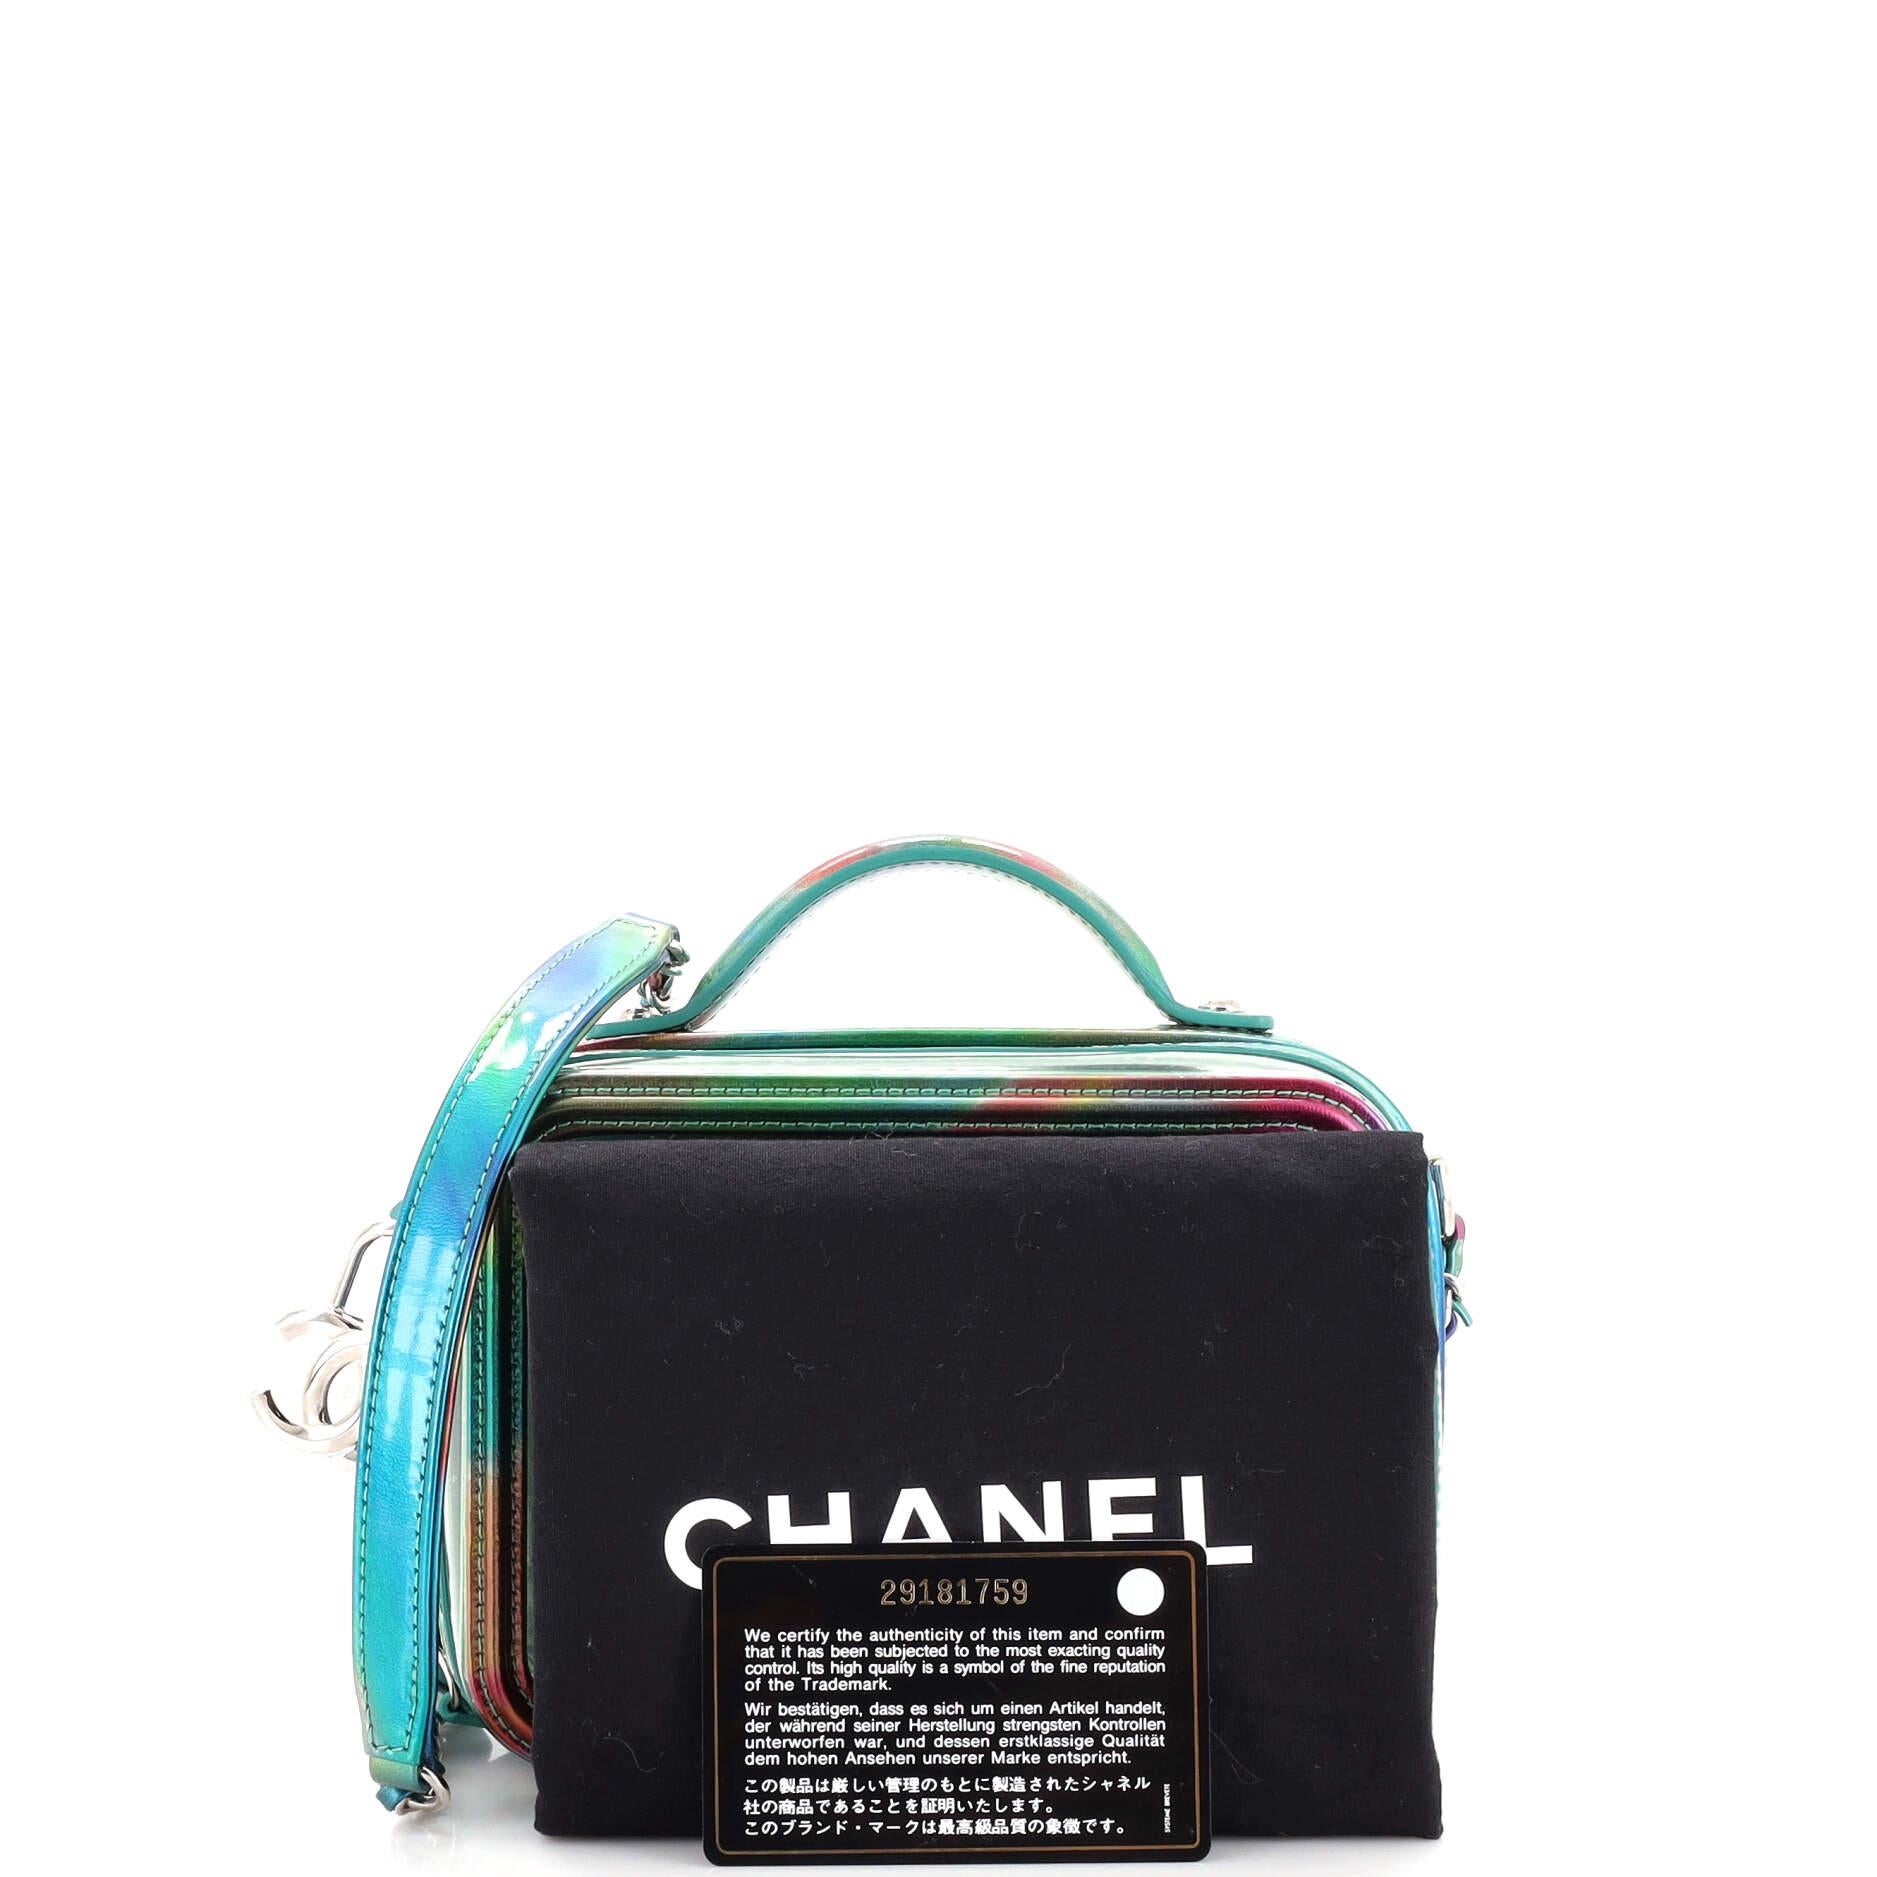 Vintage Chanel Vanity - 43 For Sale on 1stDibs  chanel vanity with chain  price, chanel classic vanity with chain, chanel vanity 22b